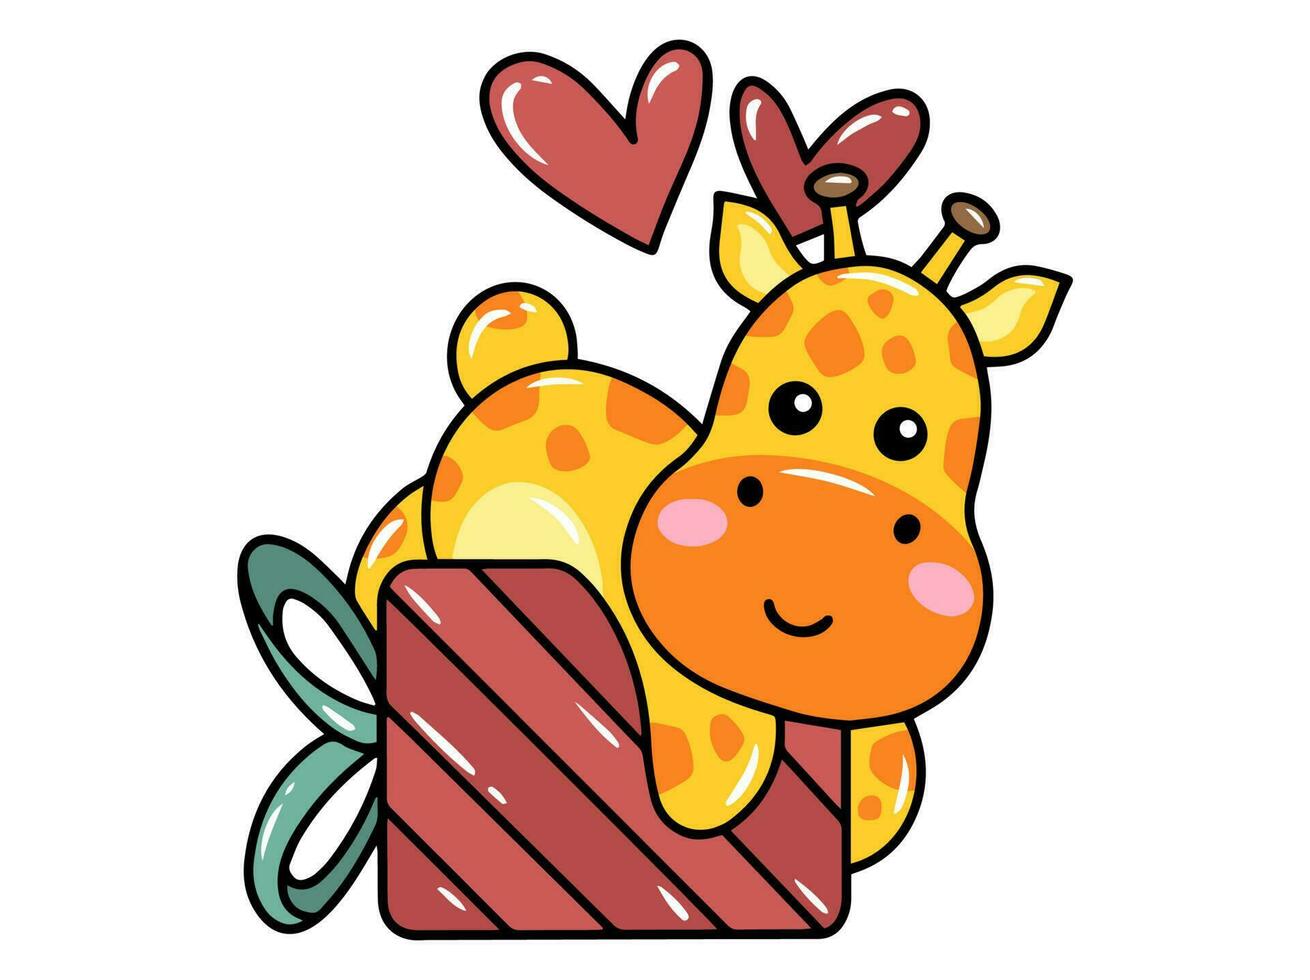 Giraffe Cartoon Cute for Valentines Day vector